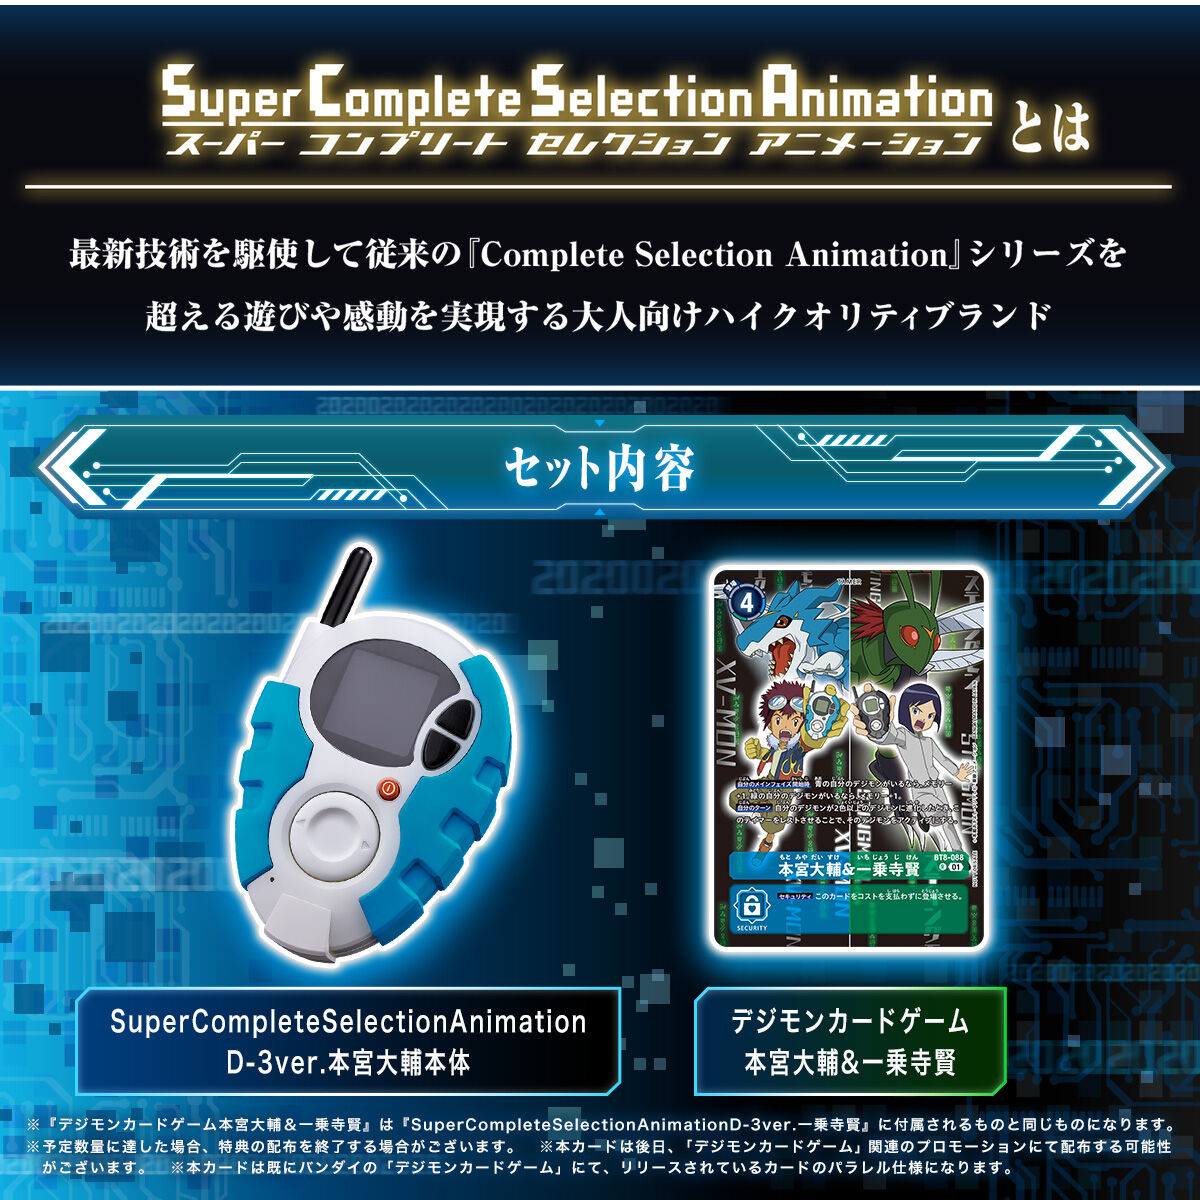 SuperCompleteSelectionAnimation D-3ver.本宮大輔 | デジモン